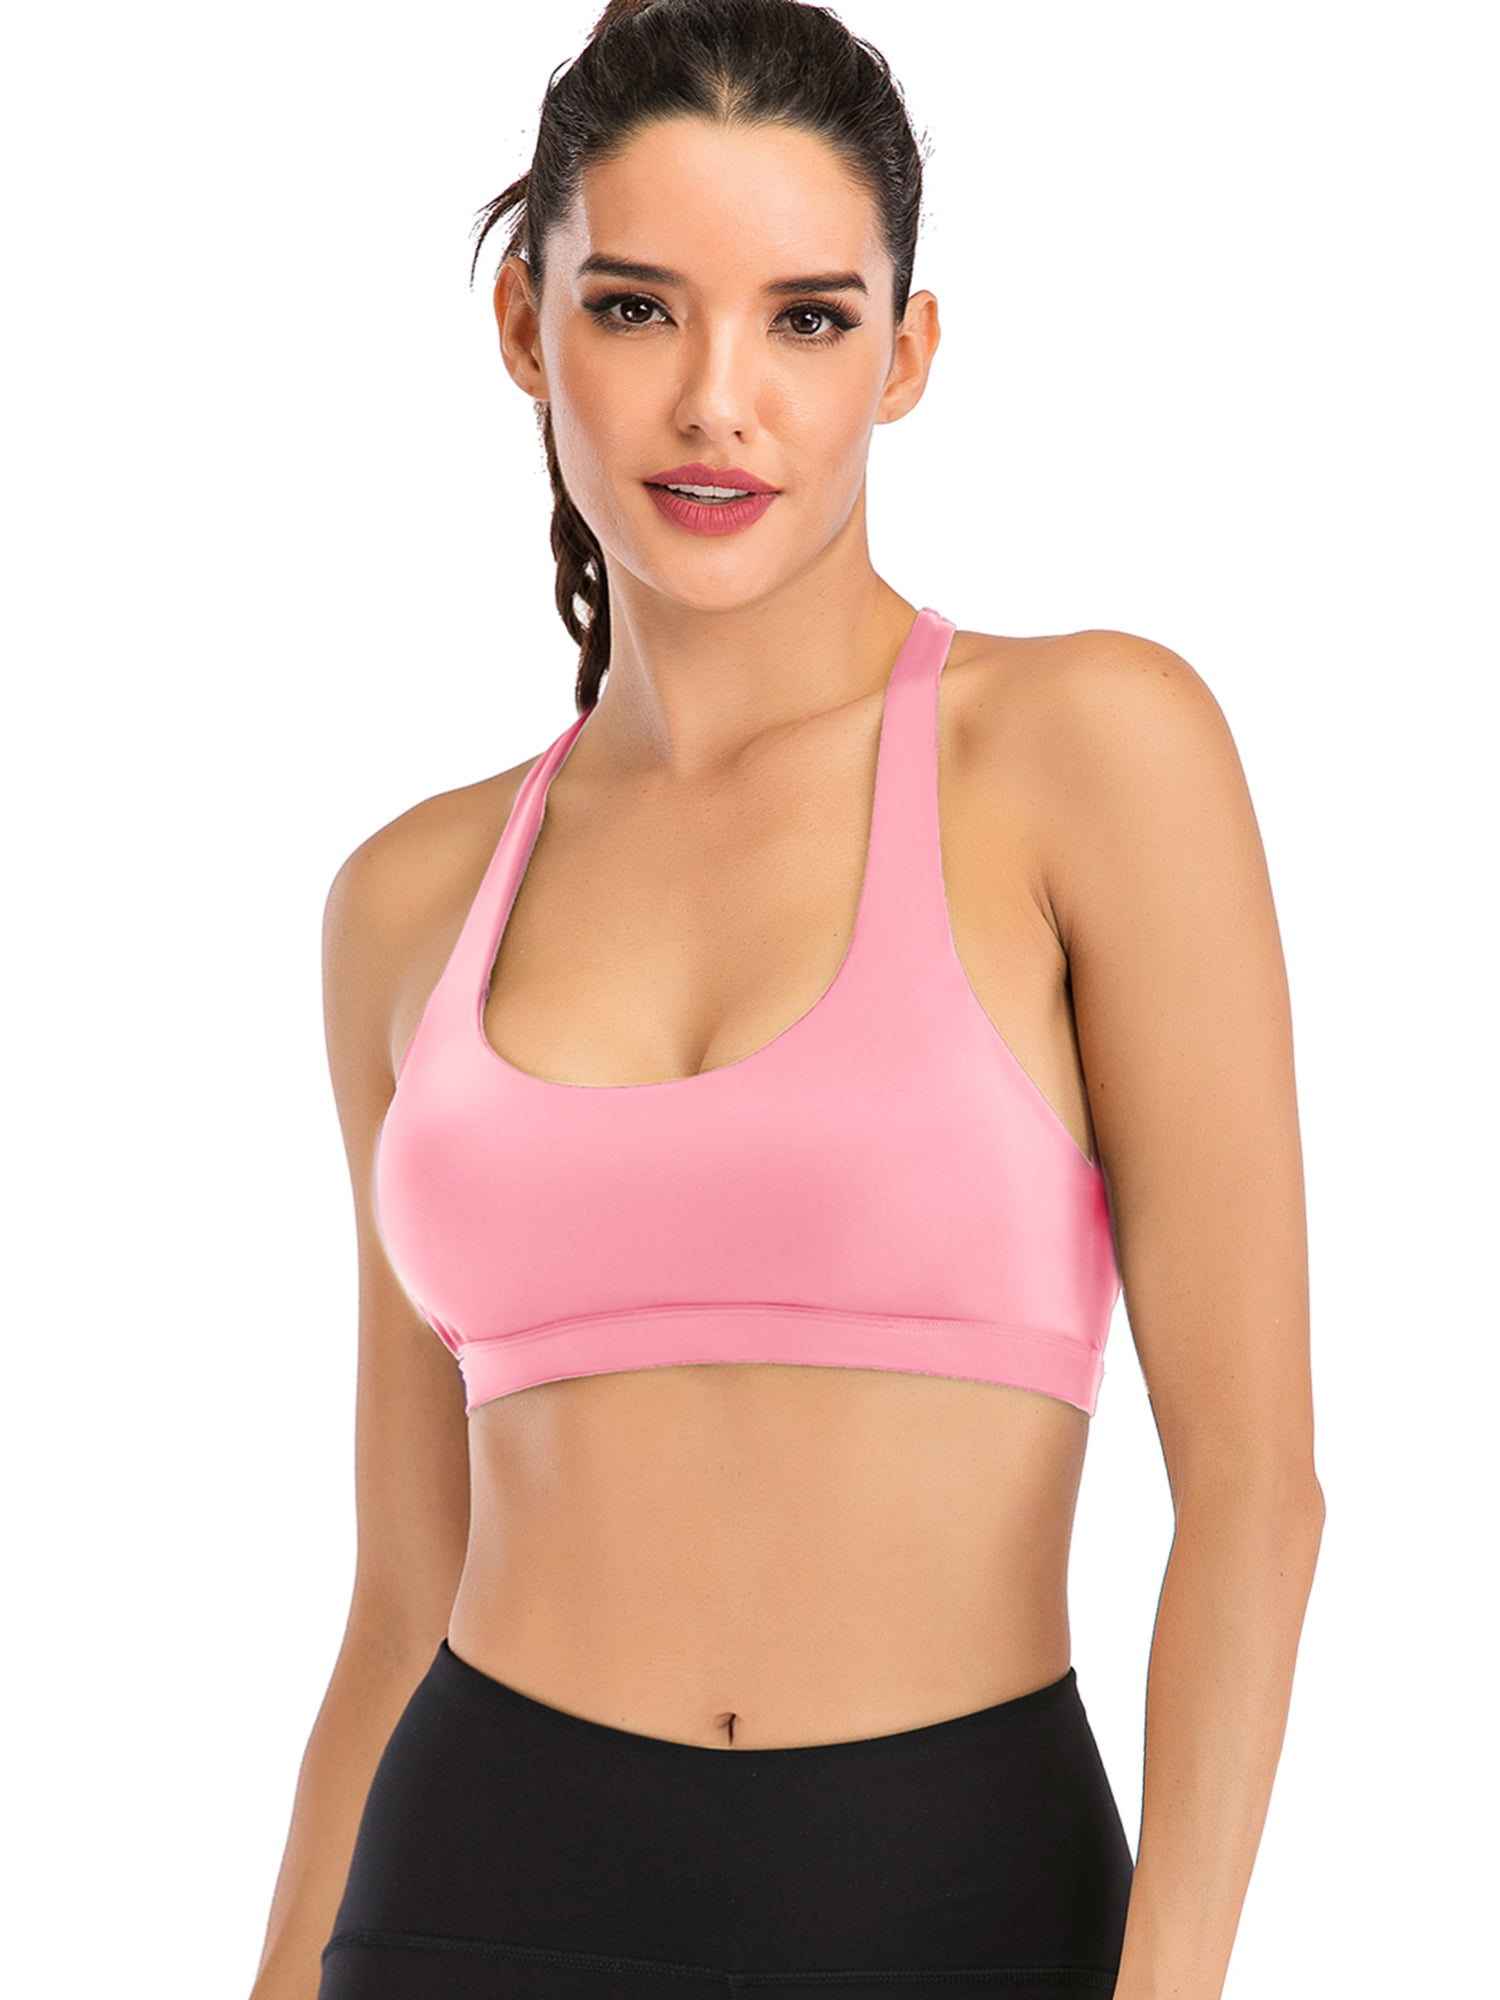 Women's Sports Bras - U Back Longline Sports Bra,Medium Support Padded  Fitness Yoga Crop Tank Top with Built-in Shelf Bra at  Women's  Clothing store